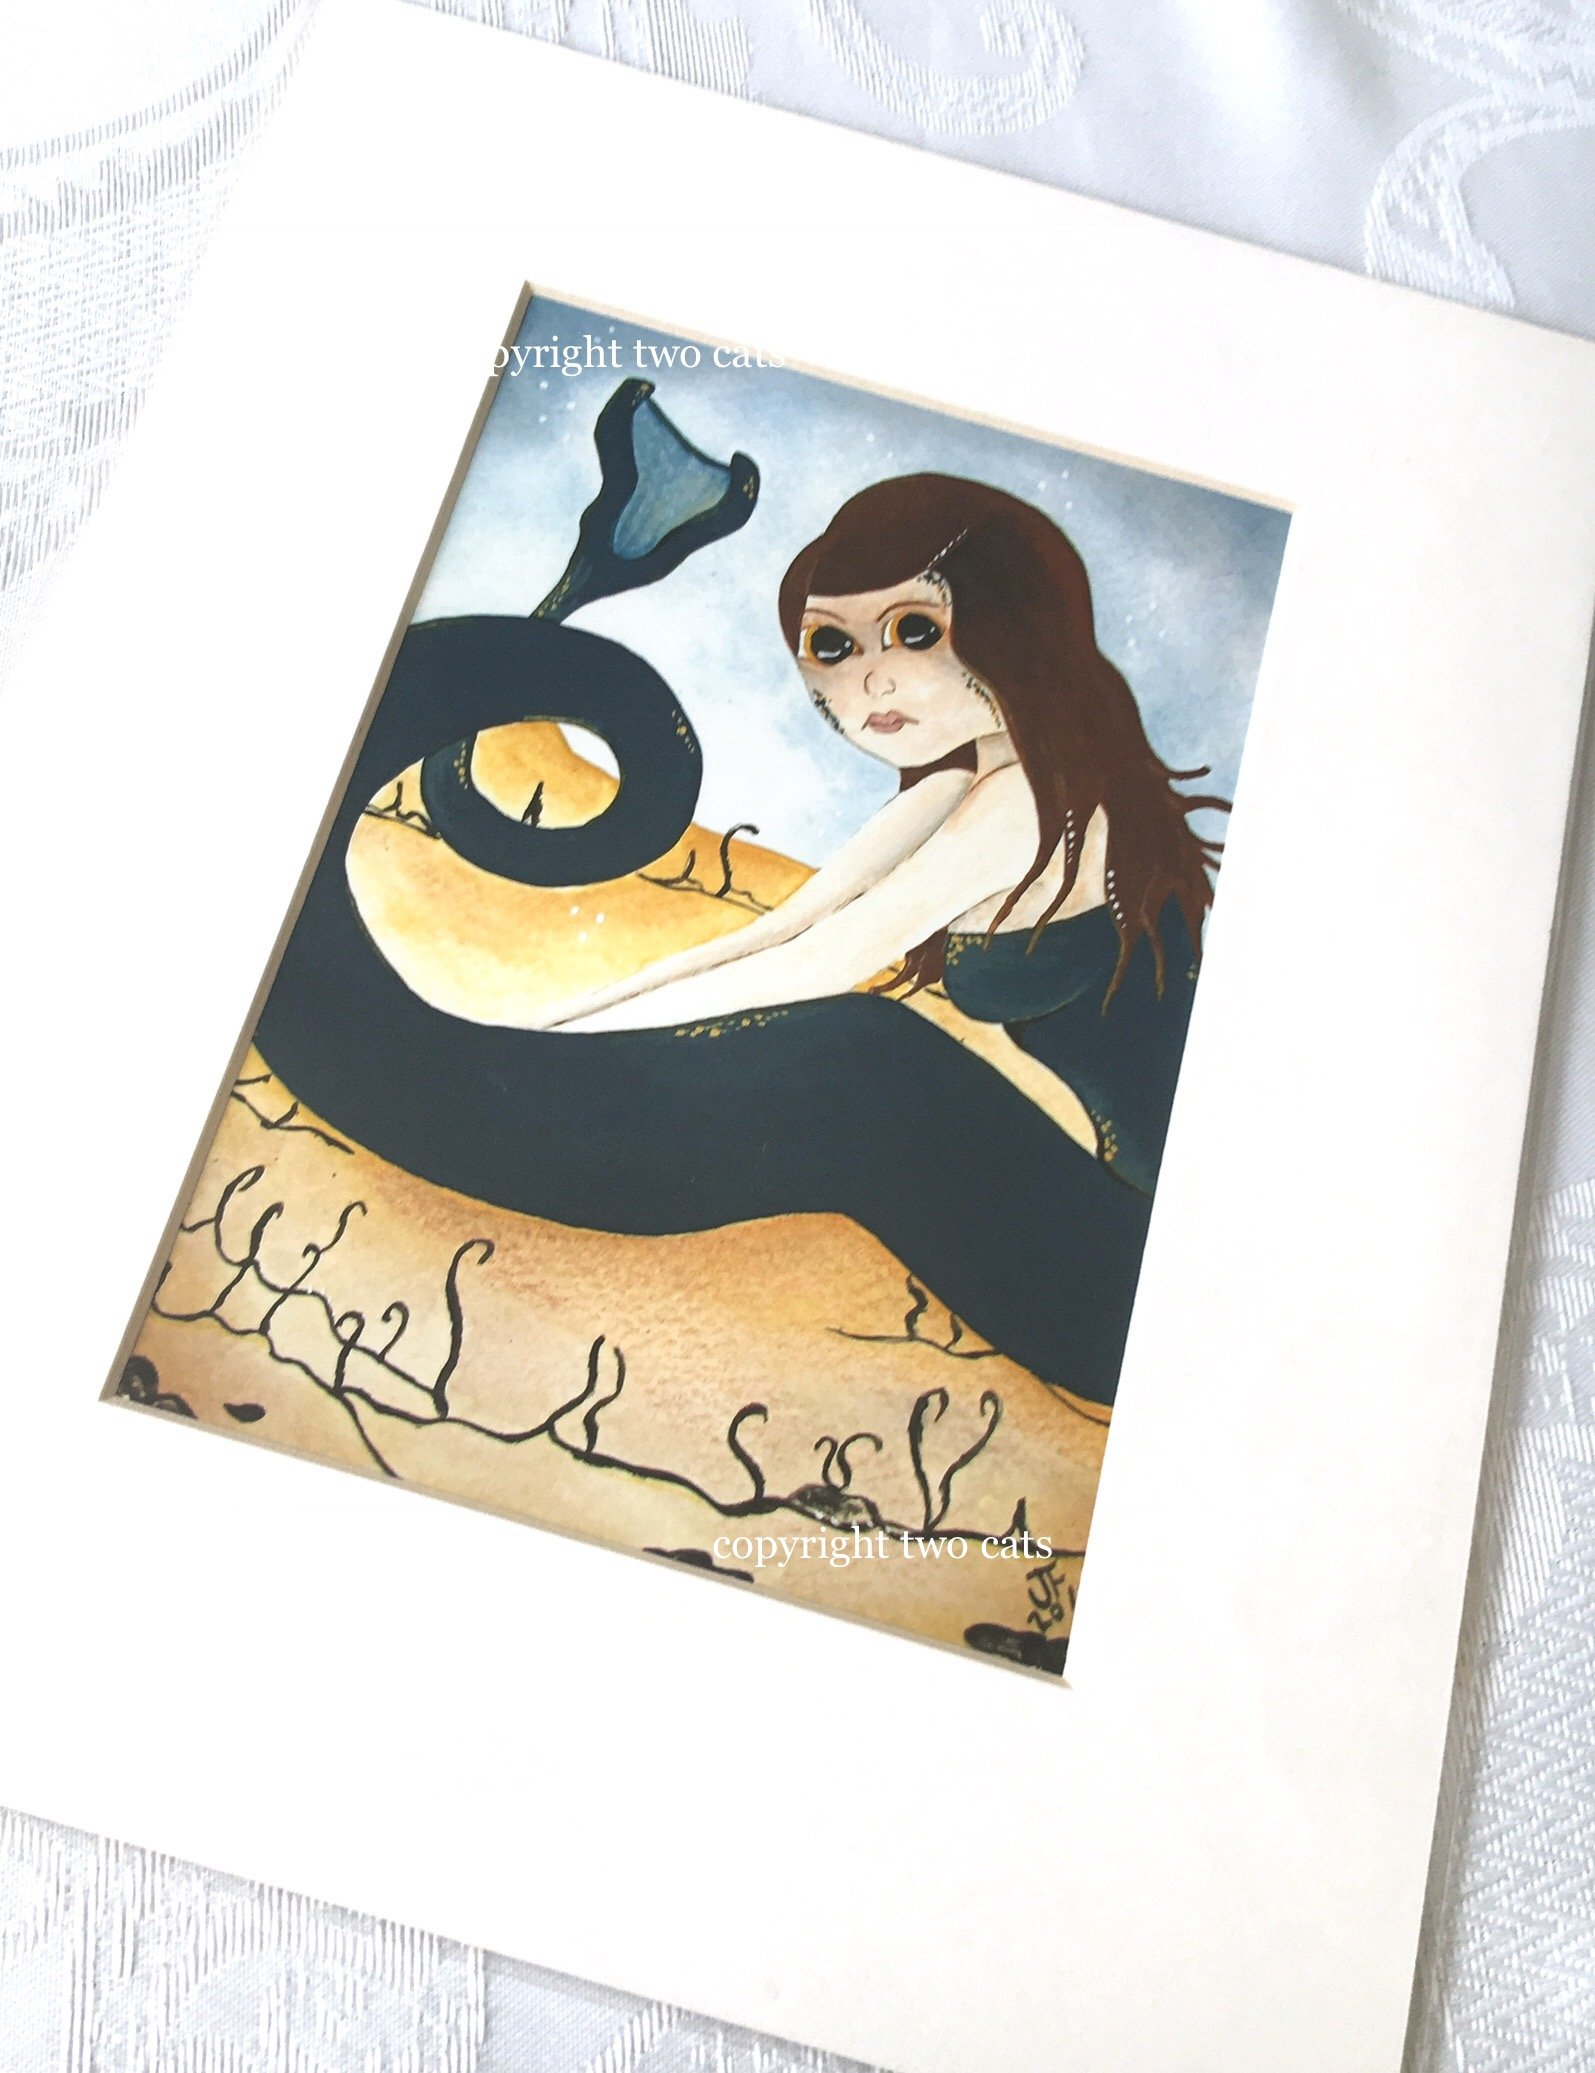 Fine art print of a mermaid in sand